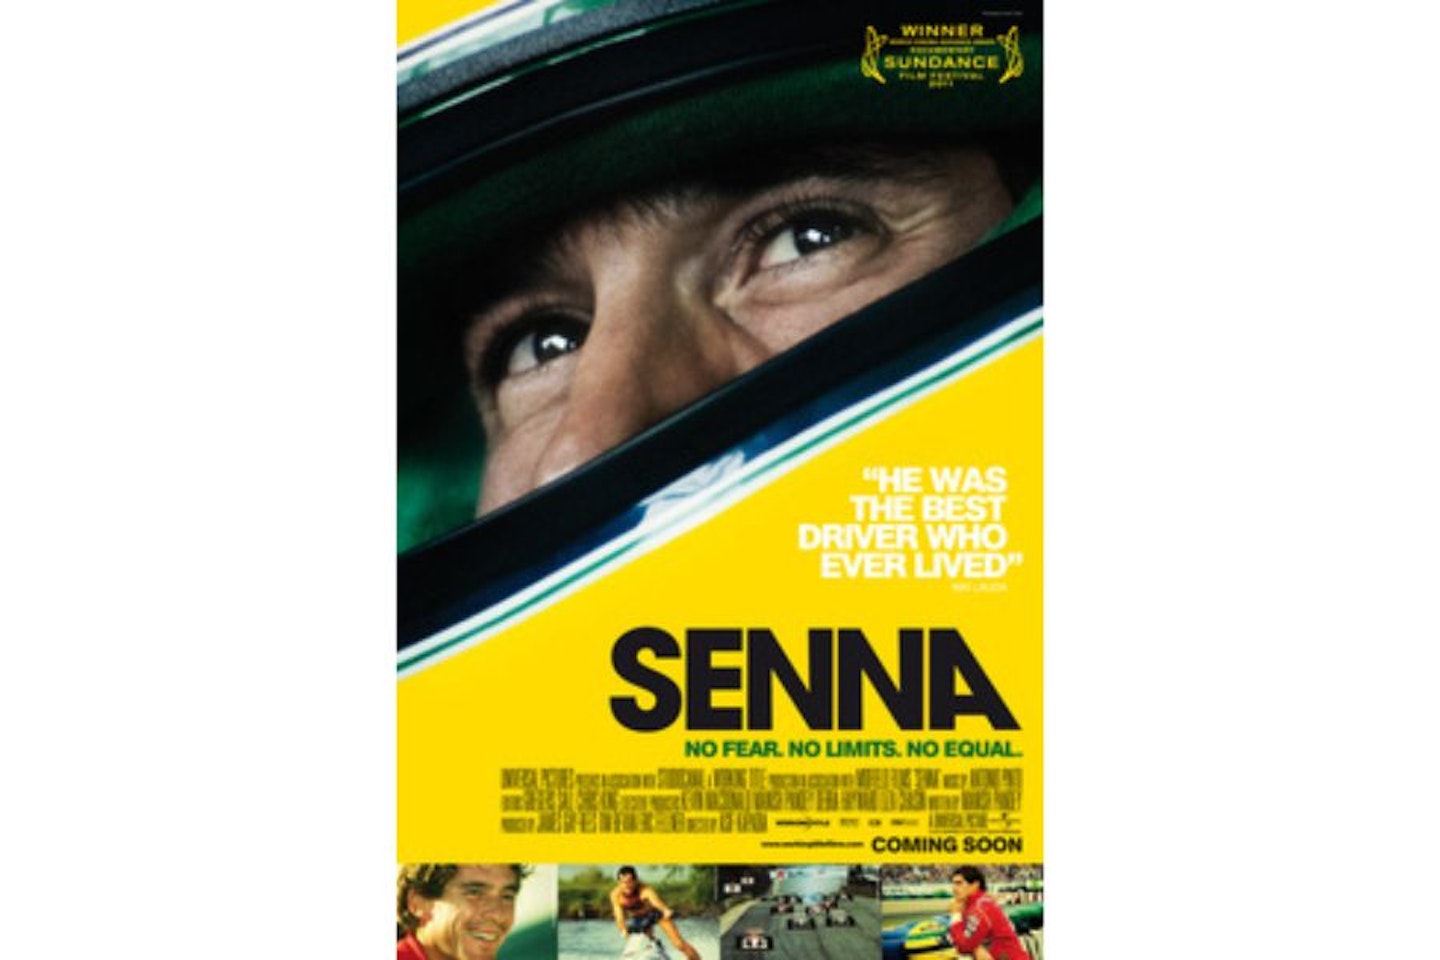 Senna Formula 1 Documentary